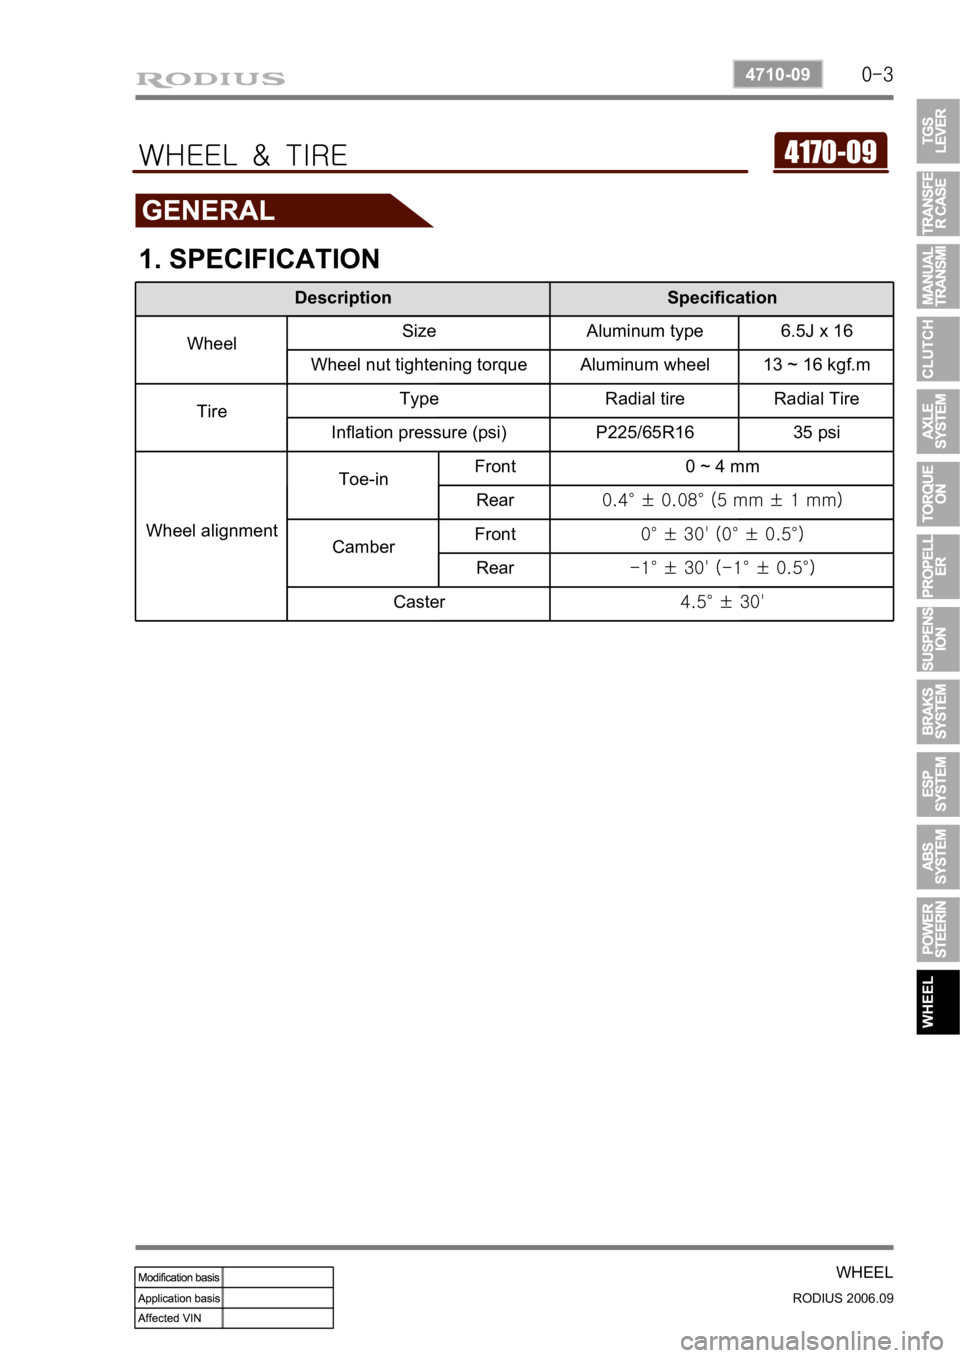 SSANGYONG RODIUS 2007  Service Manual 0-3
WHEEL 
RODIUS 2006.09
4710-09
4170-09WHEEL ＆ TIRE
1. SPECIFICATION
Description Specification
WheelSize Aluminum type 6.5J x 16
Wheel nut tightening torque Aluminum wheel 13 ~ 16 kgf.m
TireType R